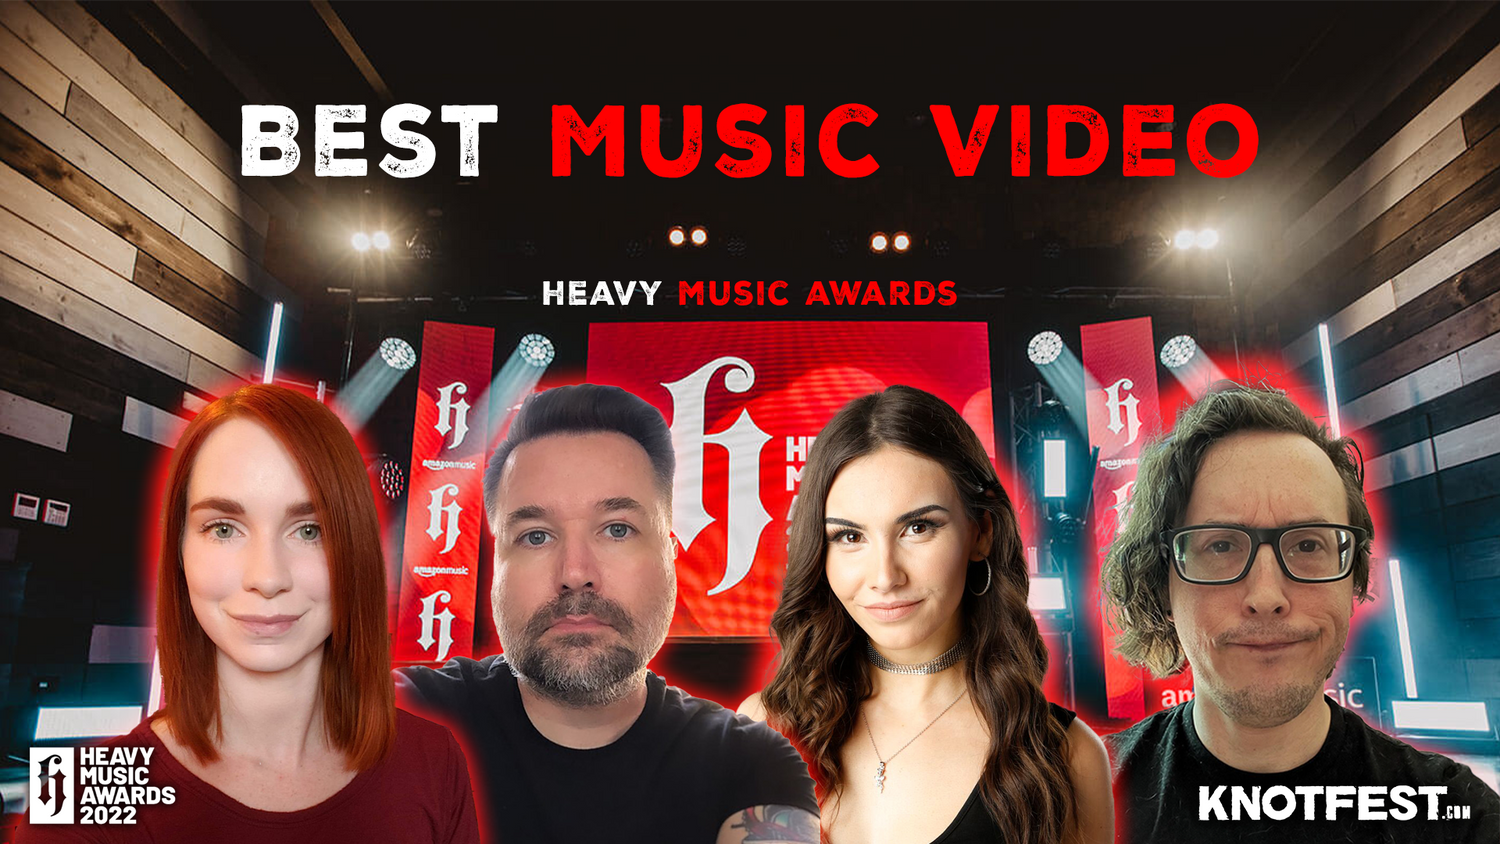 Heavy Music Awards Roundtable - Best Music Video